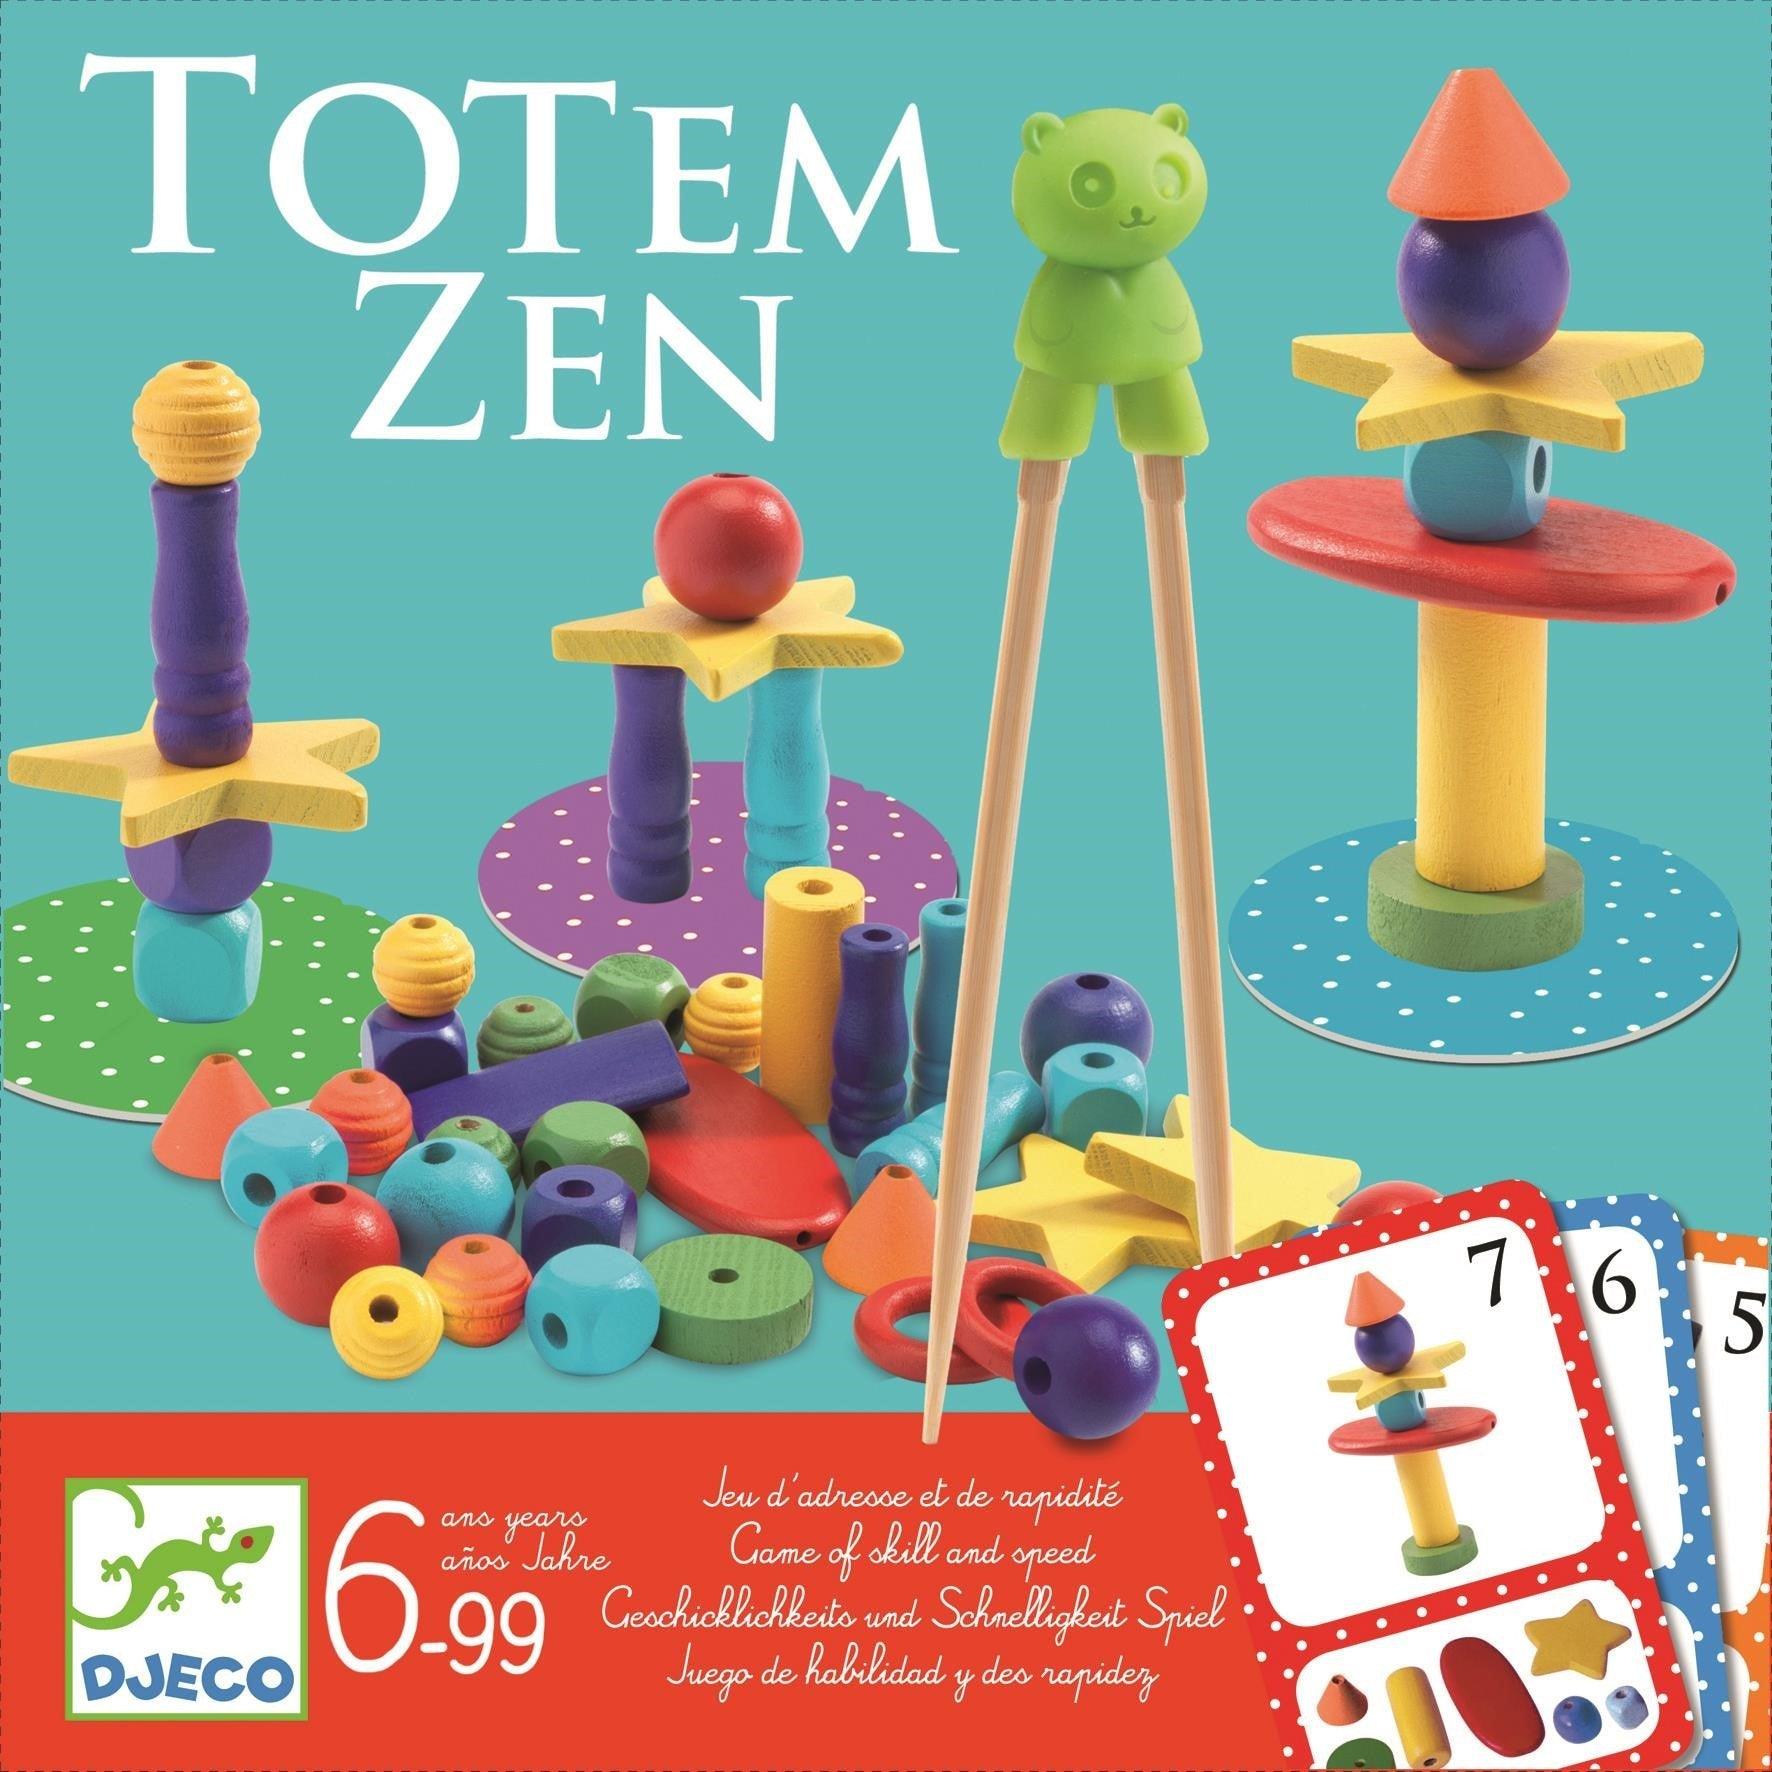 Djeco: Totem Zen Arcade igra